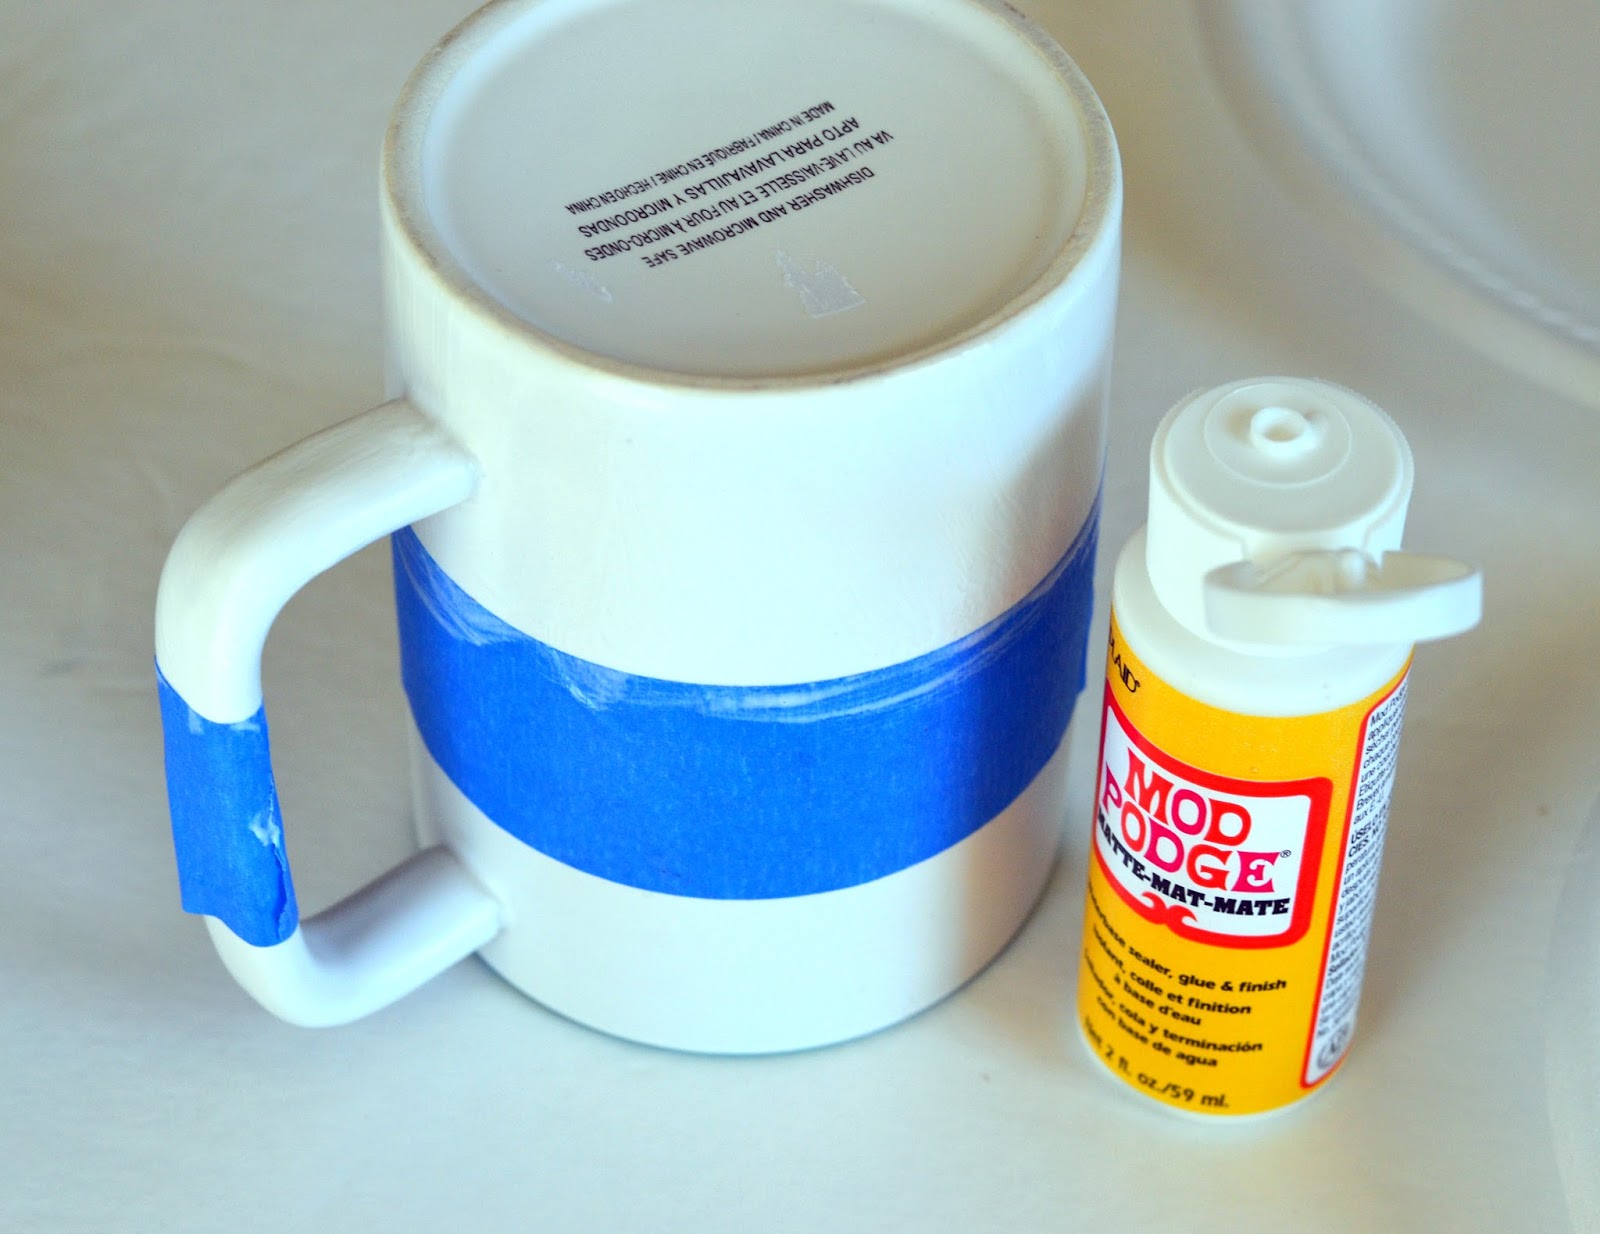 How to Make Mugs with Dishwasher Safe Mod Podge